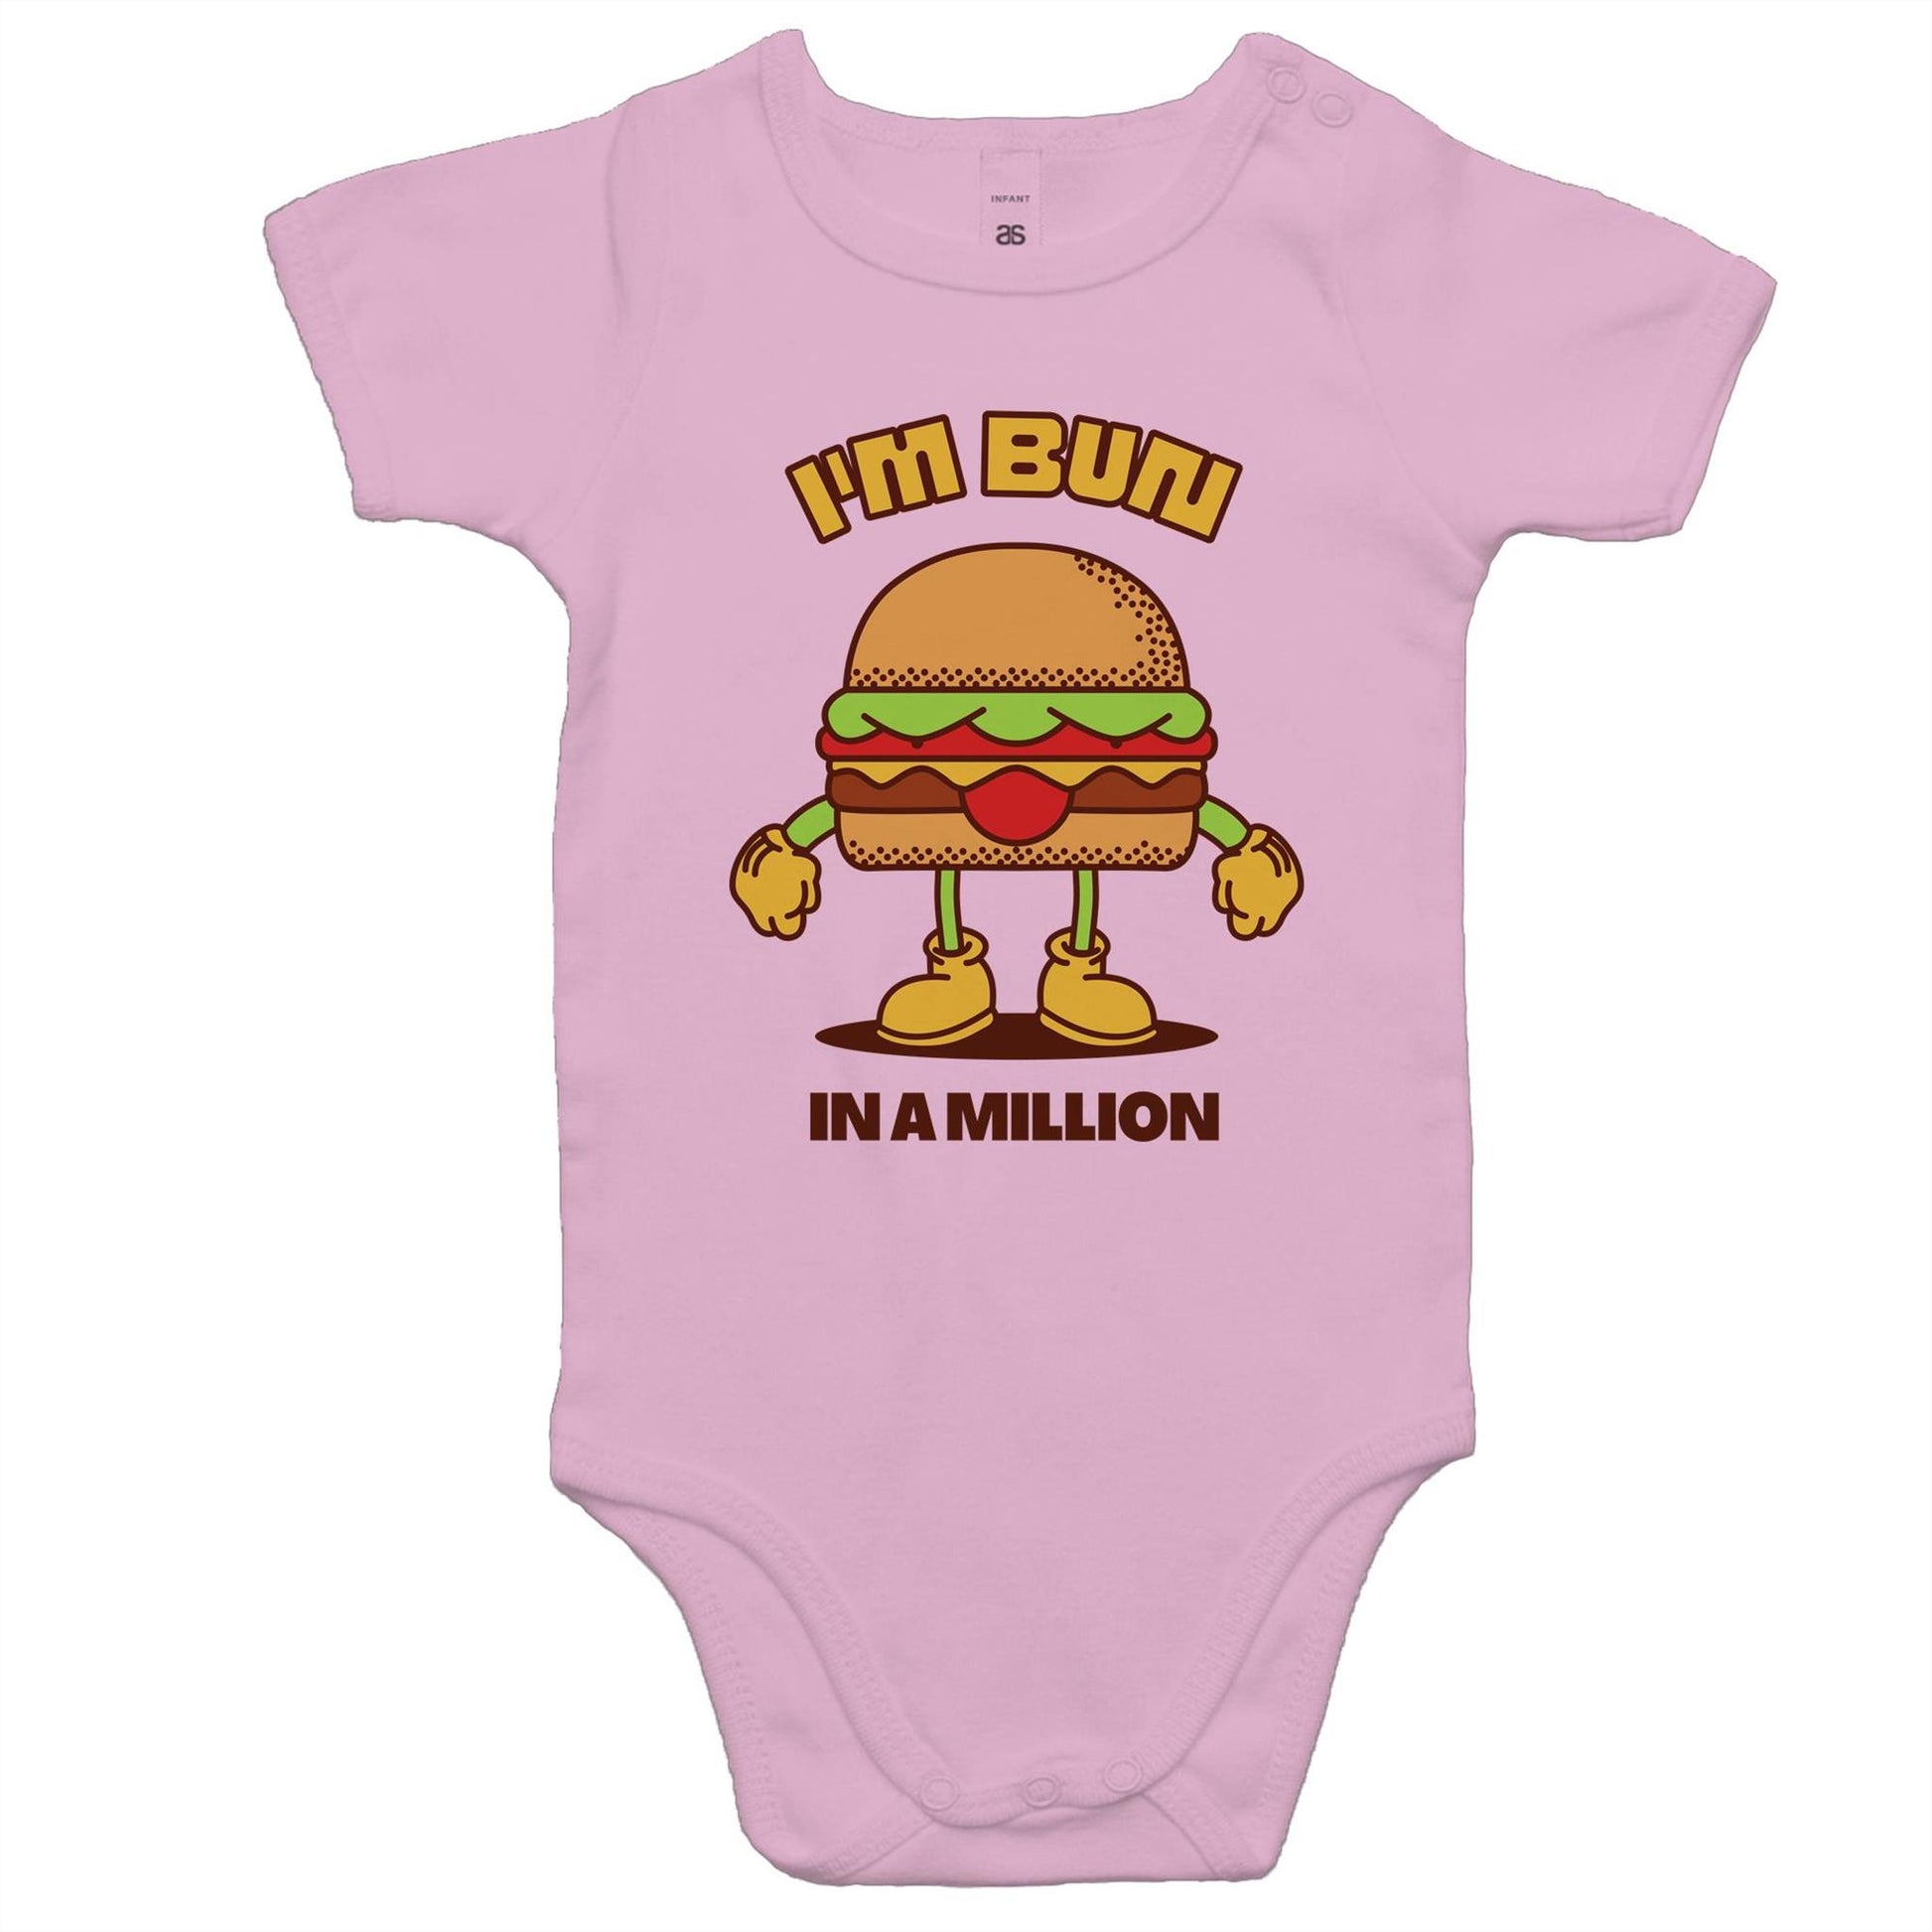 I'm Bun In A Million - Baby Bodysuit Pink Baby Bodysuit